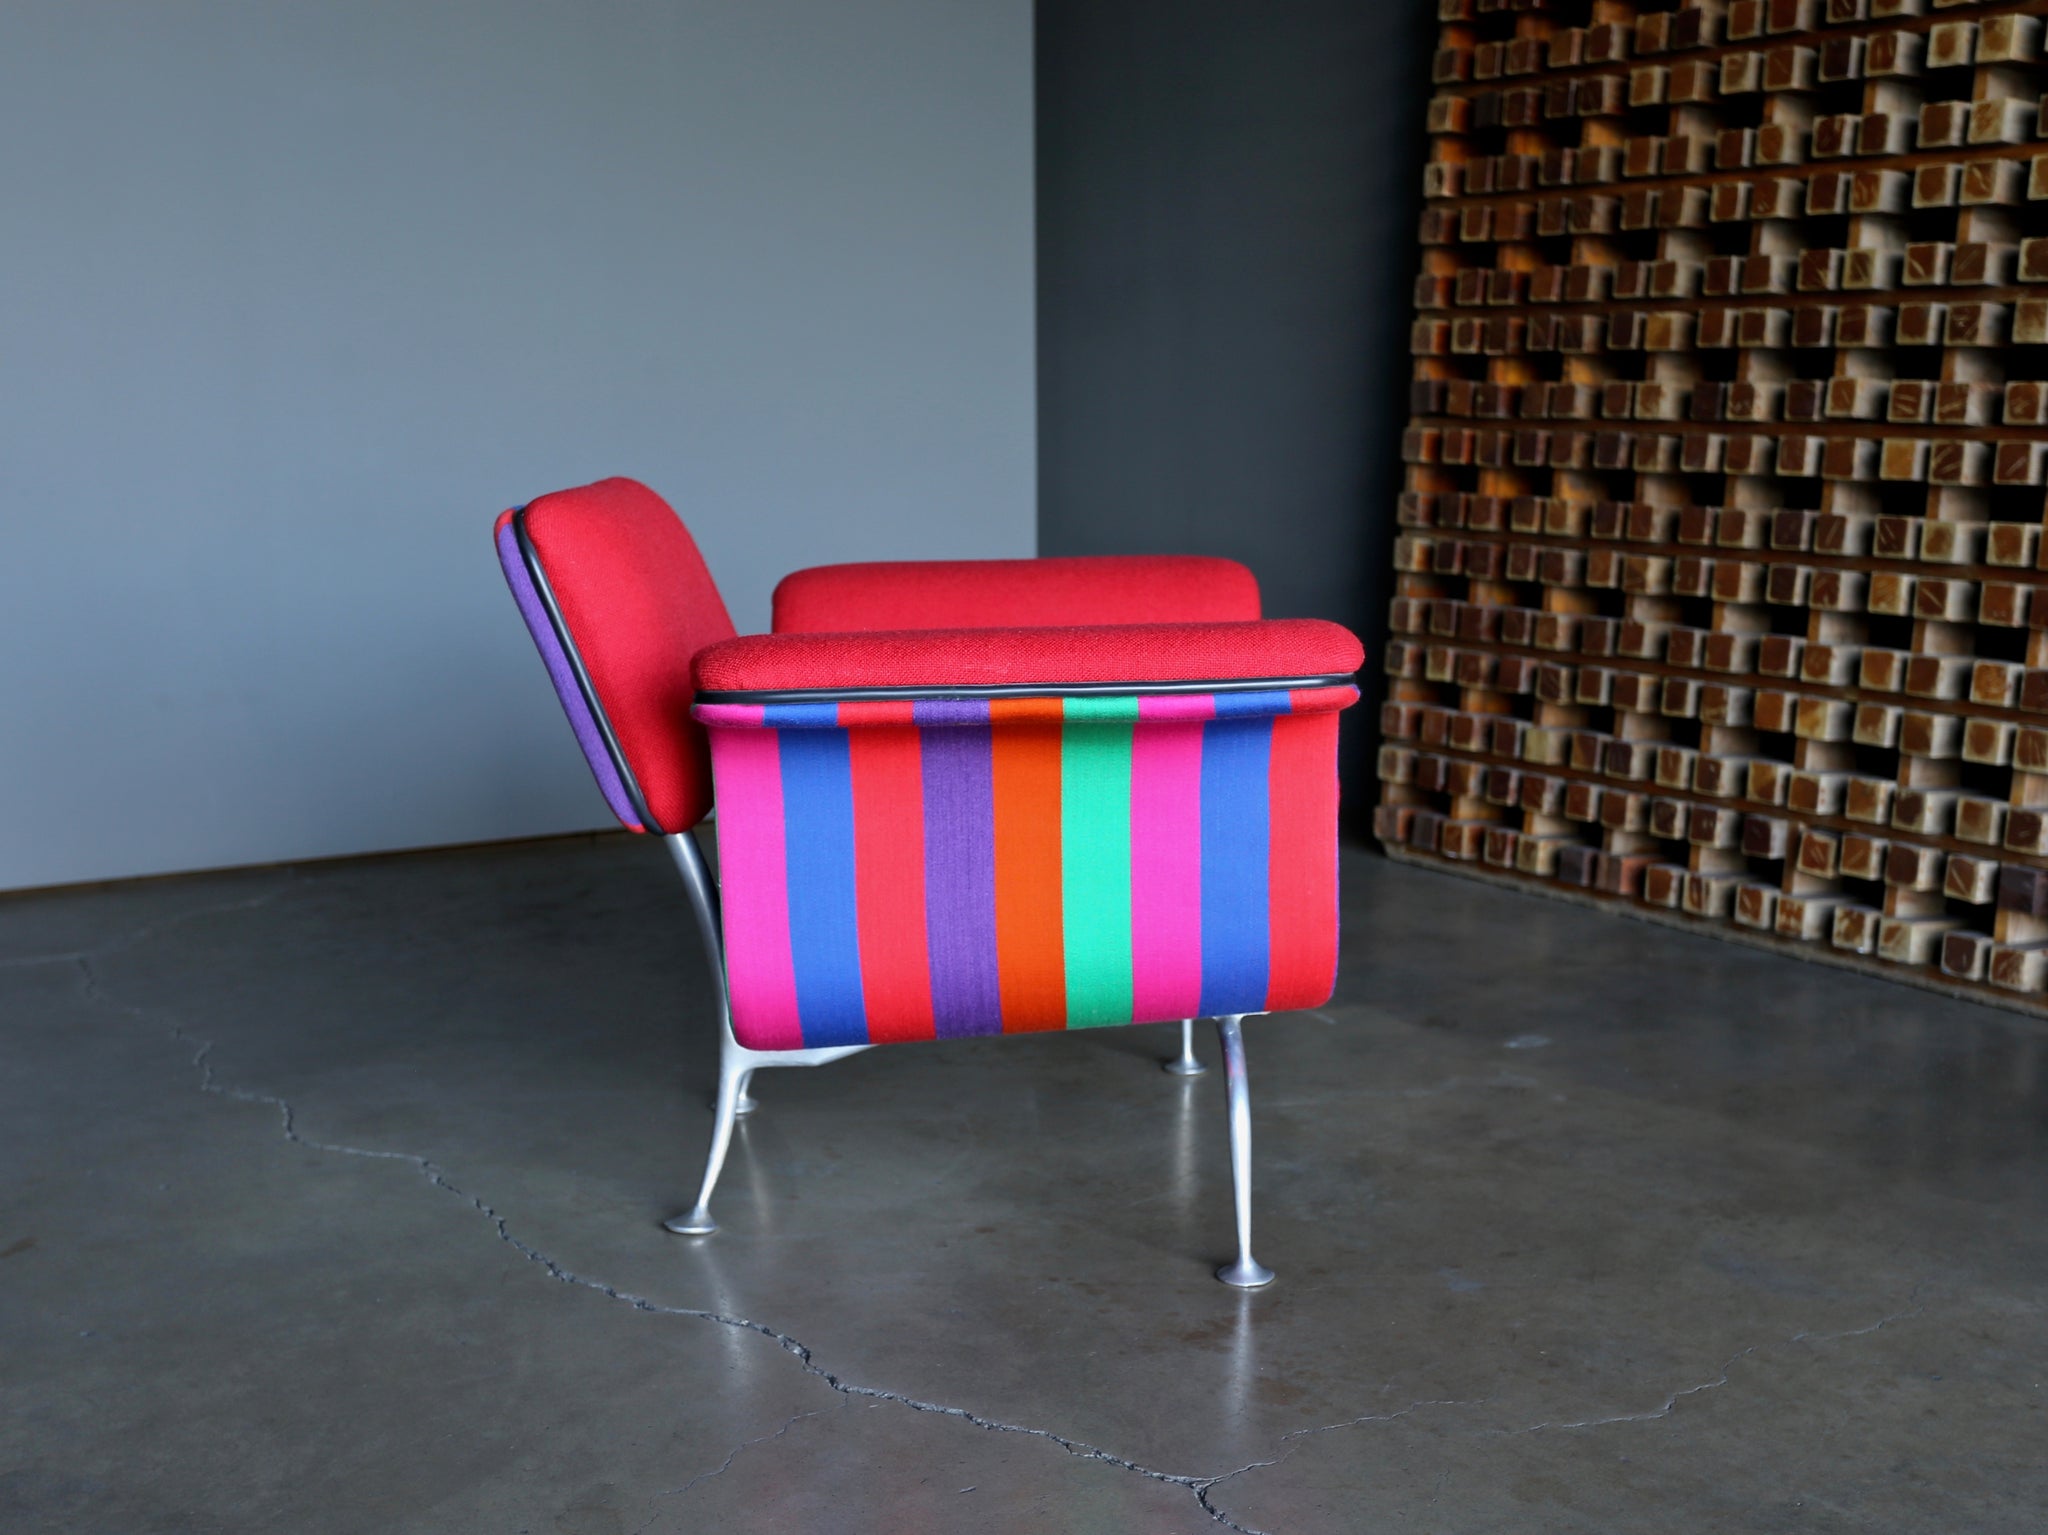 = SOLD = Alexander Girard Lounge Chairs, model 66301 for Herman Miller circa 1967